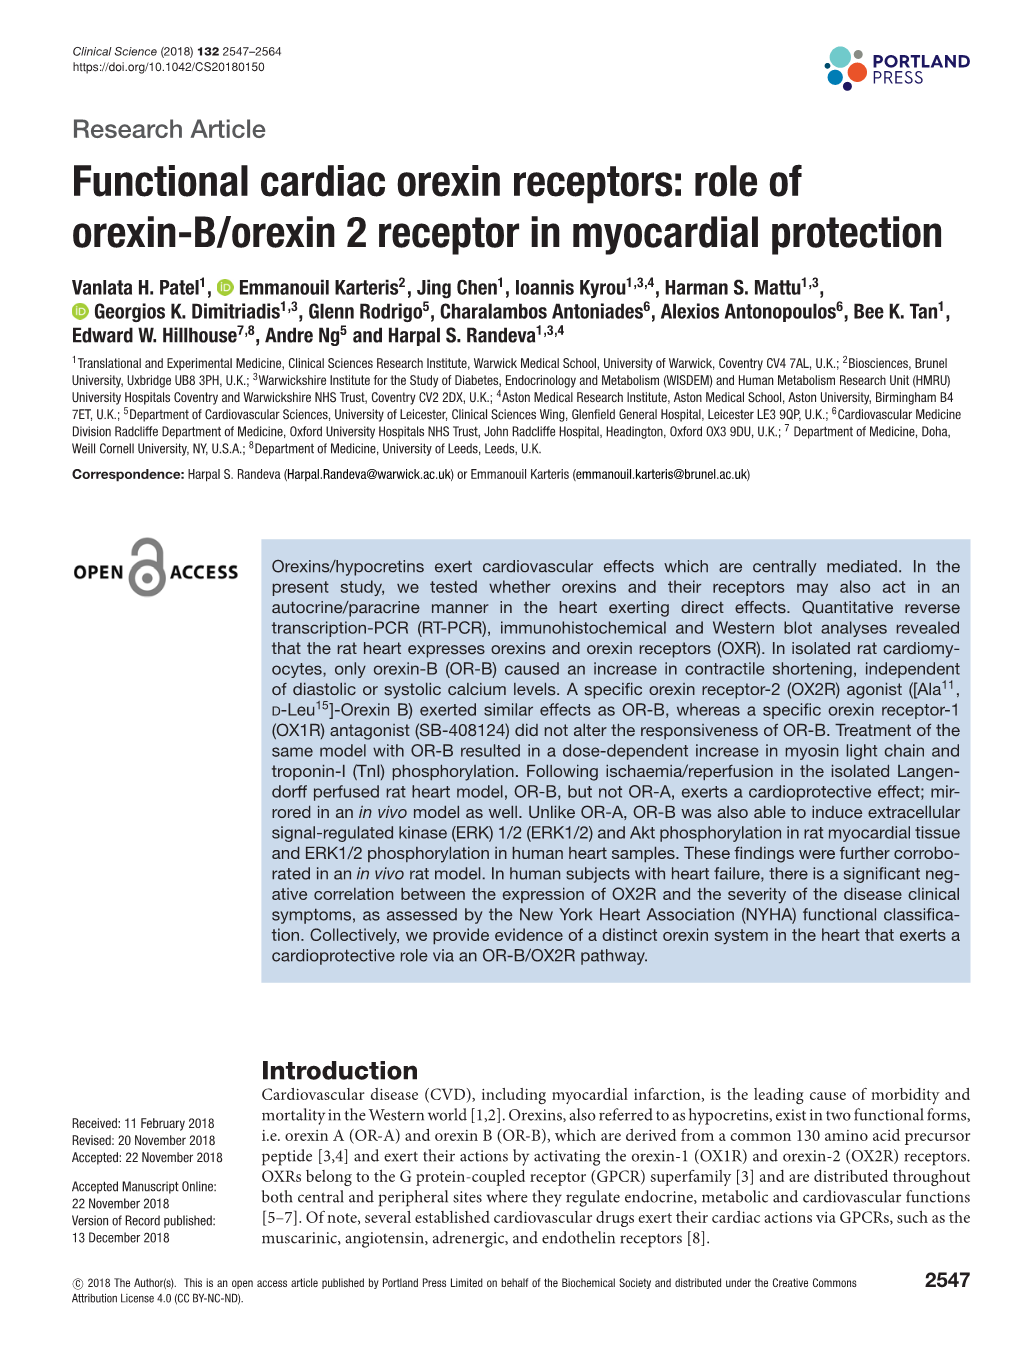 Role of Orexin-B/Orexin 2 Receptor in Myocardial Protection